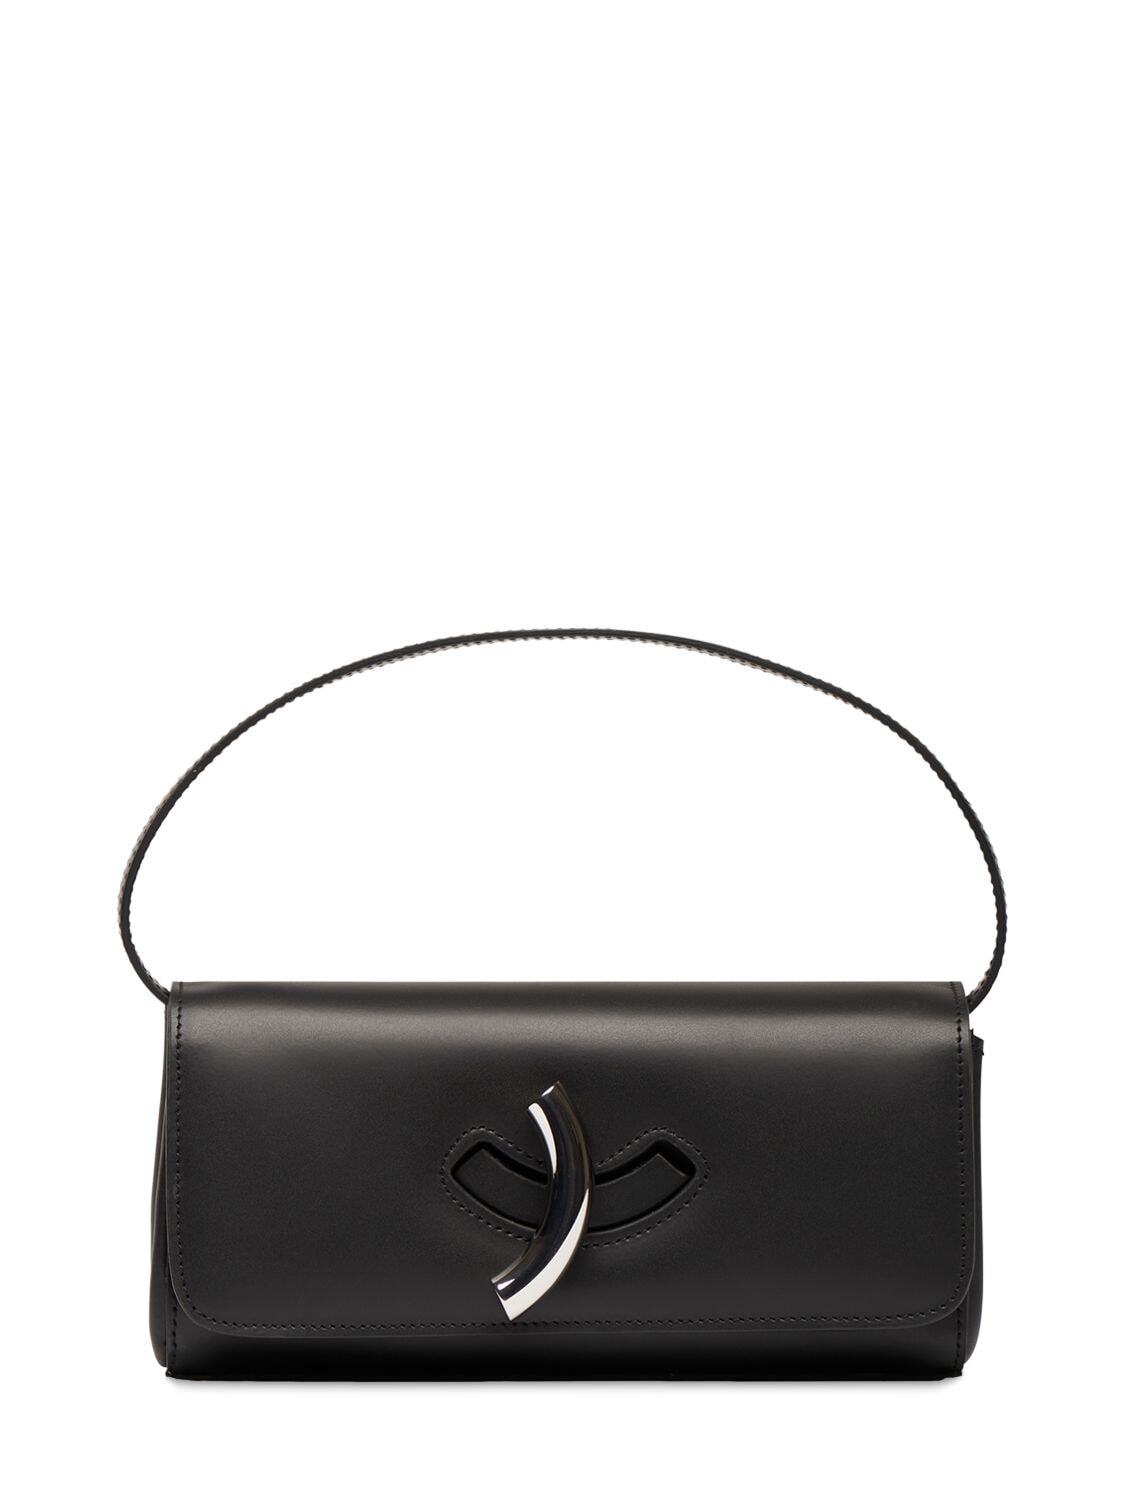 LITTLE LIFFNER Mini Maccheroni Smooth Leather Bag in black